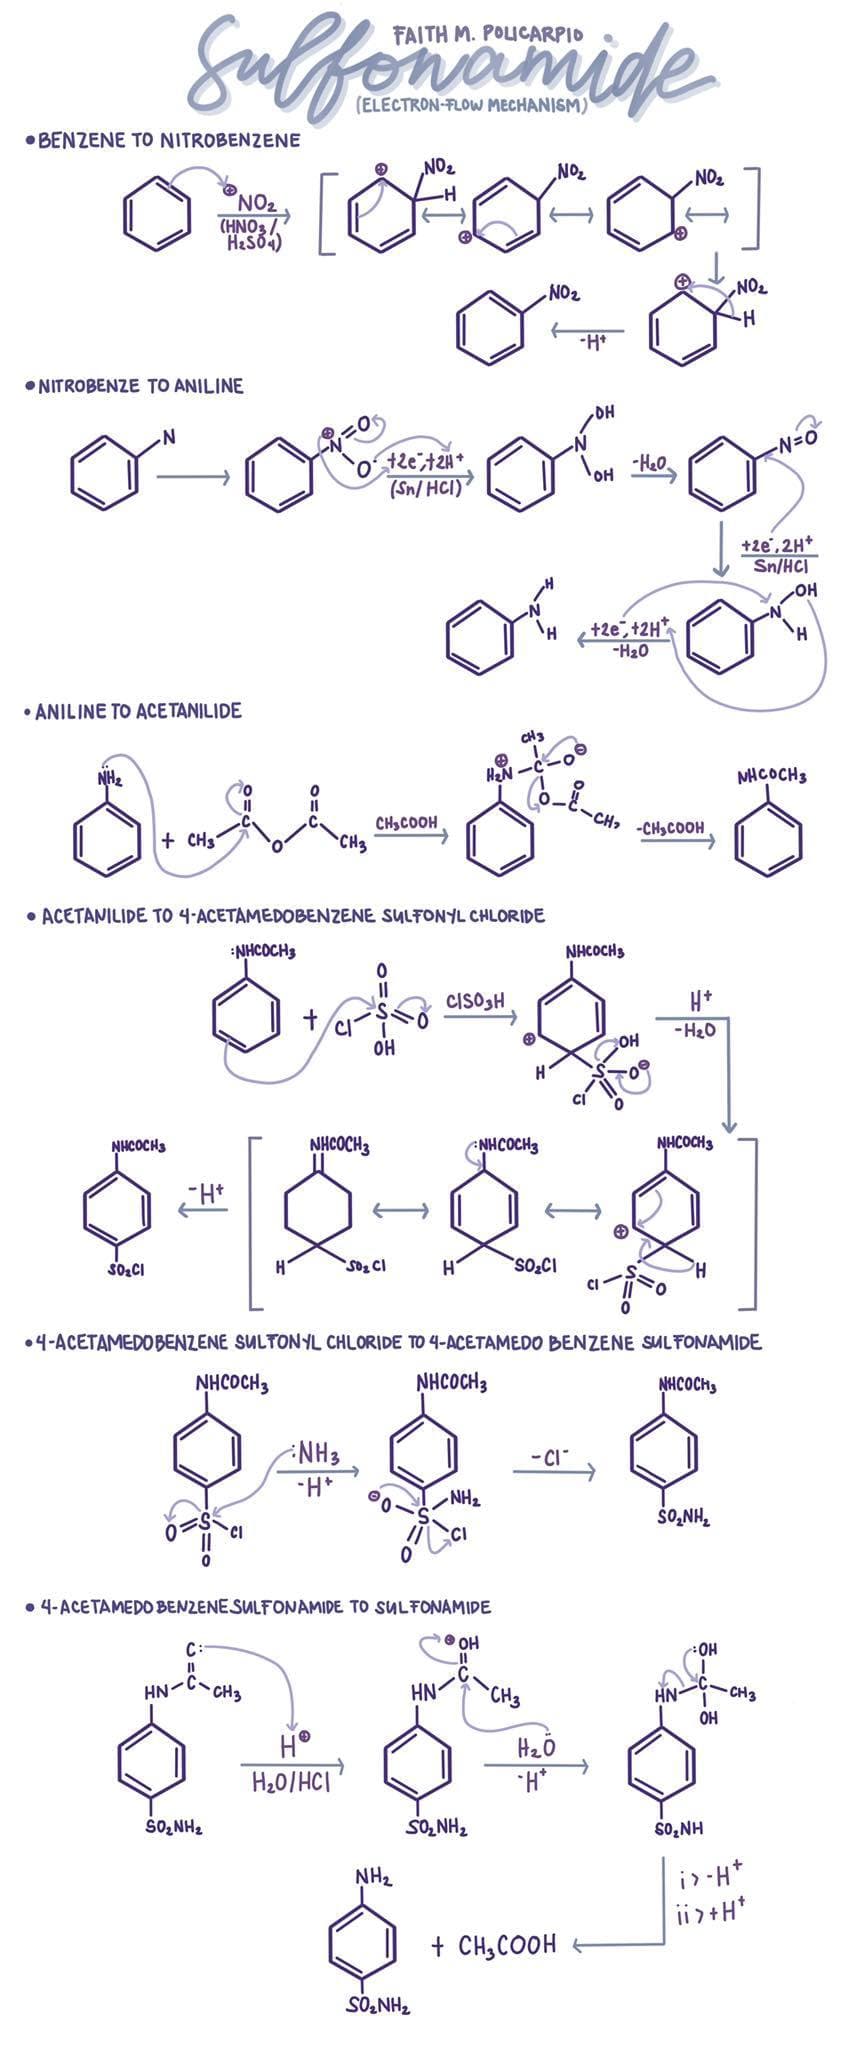 Eulfenamide
FAITH M. POLICARPIO
(ELECTRON-FLOW MECHANISM)
• BENZENE TO NITROBENZENE
NO2
NO2
NO2
NO2
(HNO3/
HeS04)
ON
-
NO2
-H*
• NITROBENZE TO ANILINE
DH
+2e,t2H*.
(Sn/ HCI)
-Heo.
+2e, 2H+
Sn/HCI
HO-
+2e, +2H
-H20
H.
• ANILINE TO ACETANILIDE
CHS
NH2
HzN
NHCOCH3
CHSCOOH
CH3
C.
-CH3COOH
+ CHs
• ACETANILIDE TO 4-ACETAMEDOBENZENE SULFONYL CHLORIDE
NHCOCH3
NHCOCHS
CISOSH
H*
-H20
OH
OH
NHCOCHS
NHCOCH3
NHCOCH3
NHCOCH3
H
SO,CI
•4-ACETAMEDO BENZENE SULTONYL CHLORIDE TO 4-ACETAMEDO BENZENE SUL FONAMIDE
NHCOCH3
NHCOCH3
NHCOCH,
NH3
H-
-CI
NH2
ŠO NH,
• 4-ACETAMEDO BENZENESULFONAMIDE TO SULFONAMIDE
O OH
C:
HO:
HN-
CH3
HN-
CH3
HN-
CH3
OH
H°
Hzö
H20/HCI
„H.
ŠO, NH2
SO, NH2
SO̟NH
NH2
i> -H*
ii>+H*
+ CH,COOH
SO-NH2
